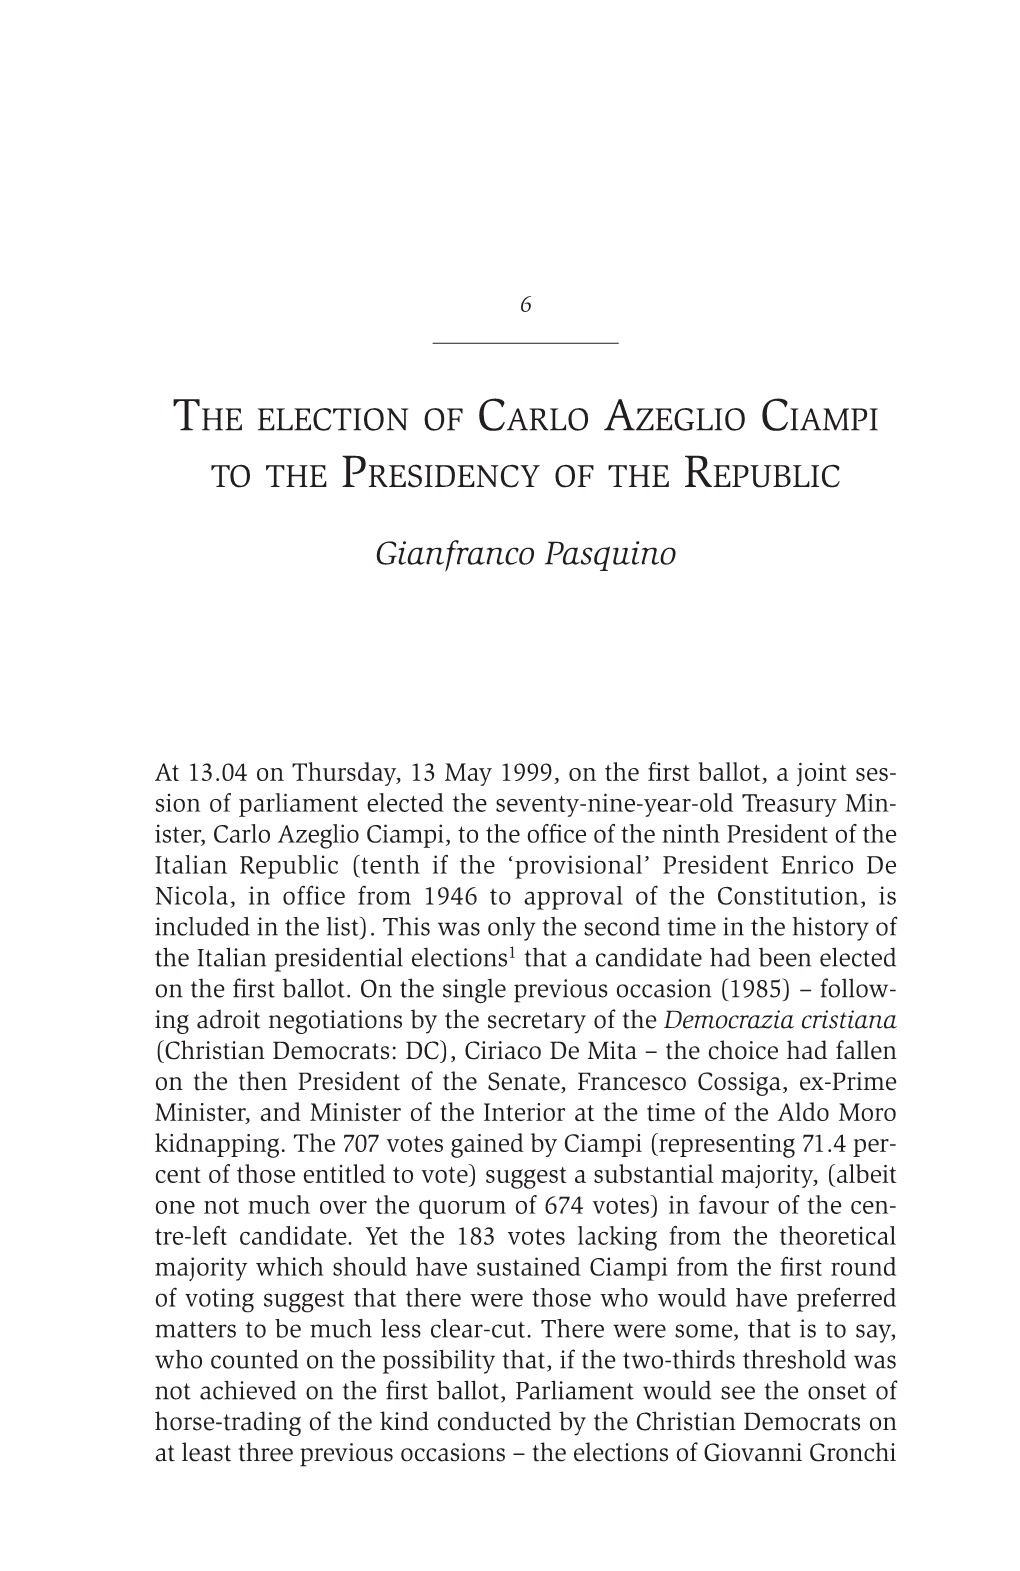 The Election of Carlo Azeglio Ciampi to the Presidency of the Republic